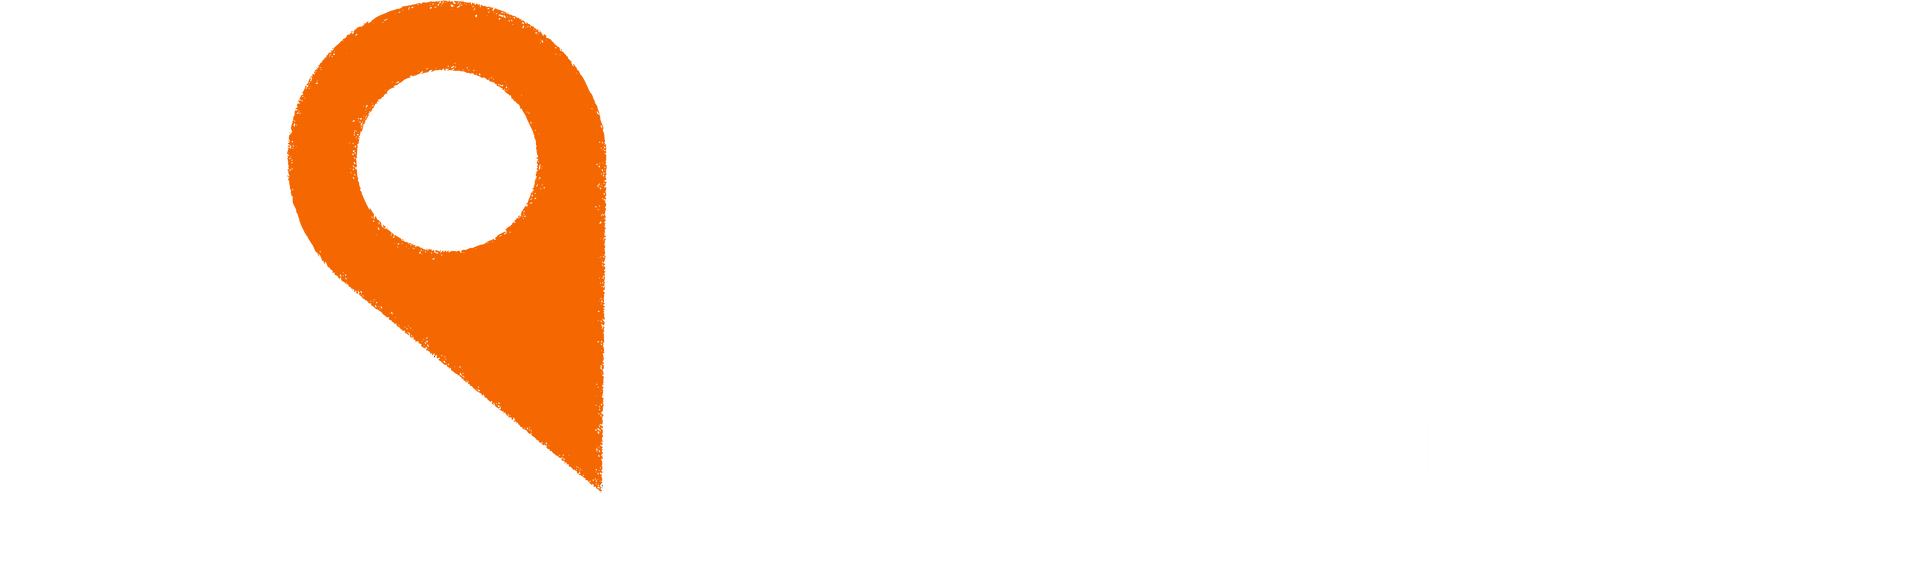 Growth Roadmaps